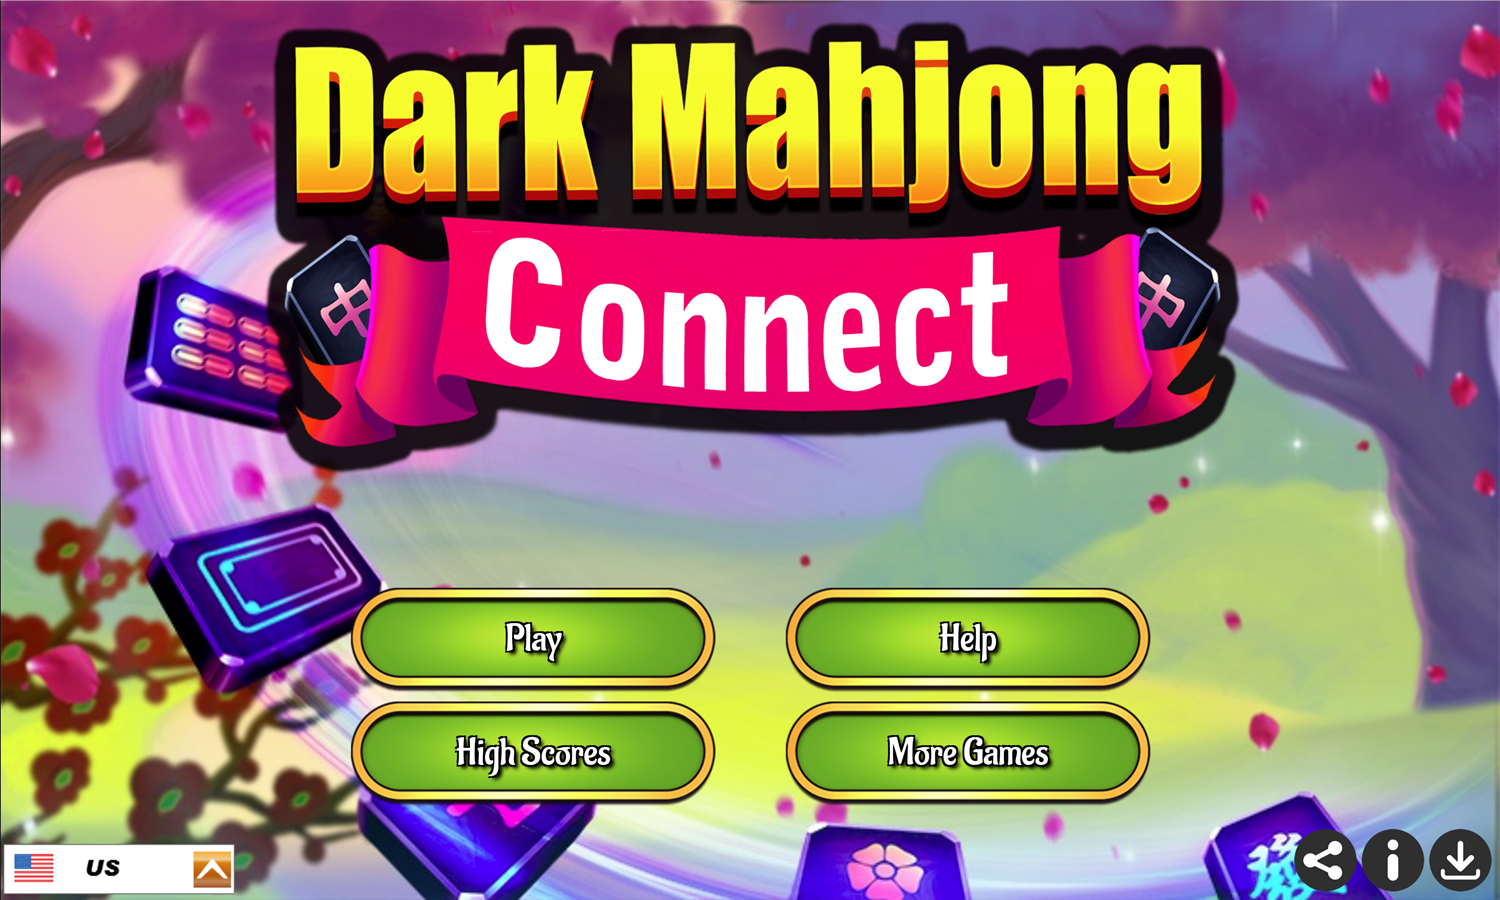 Dark Mahjong Connect